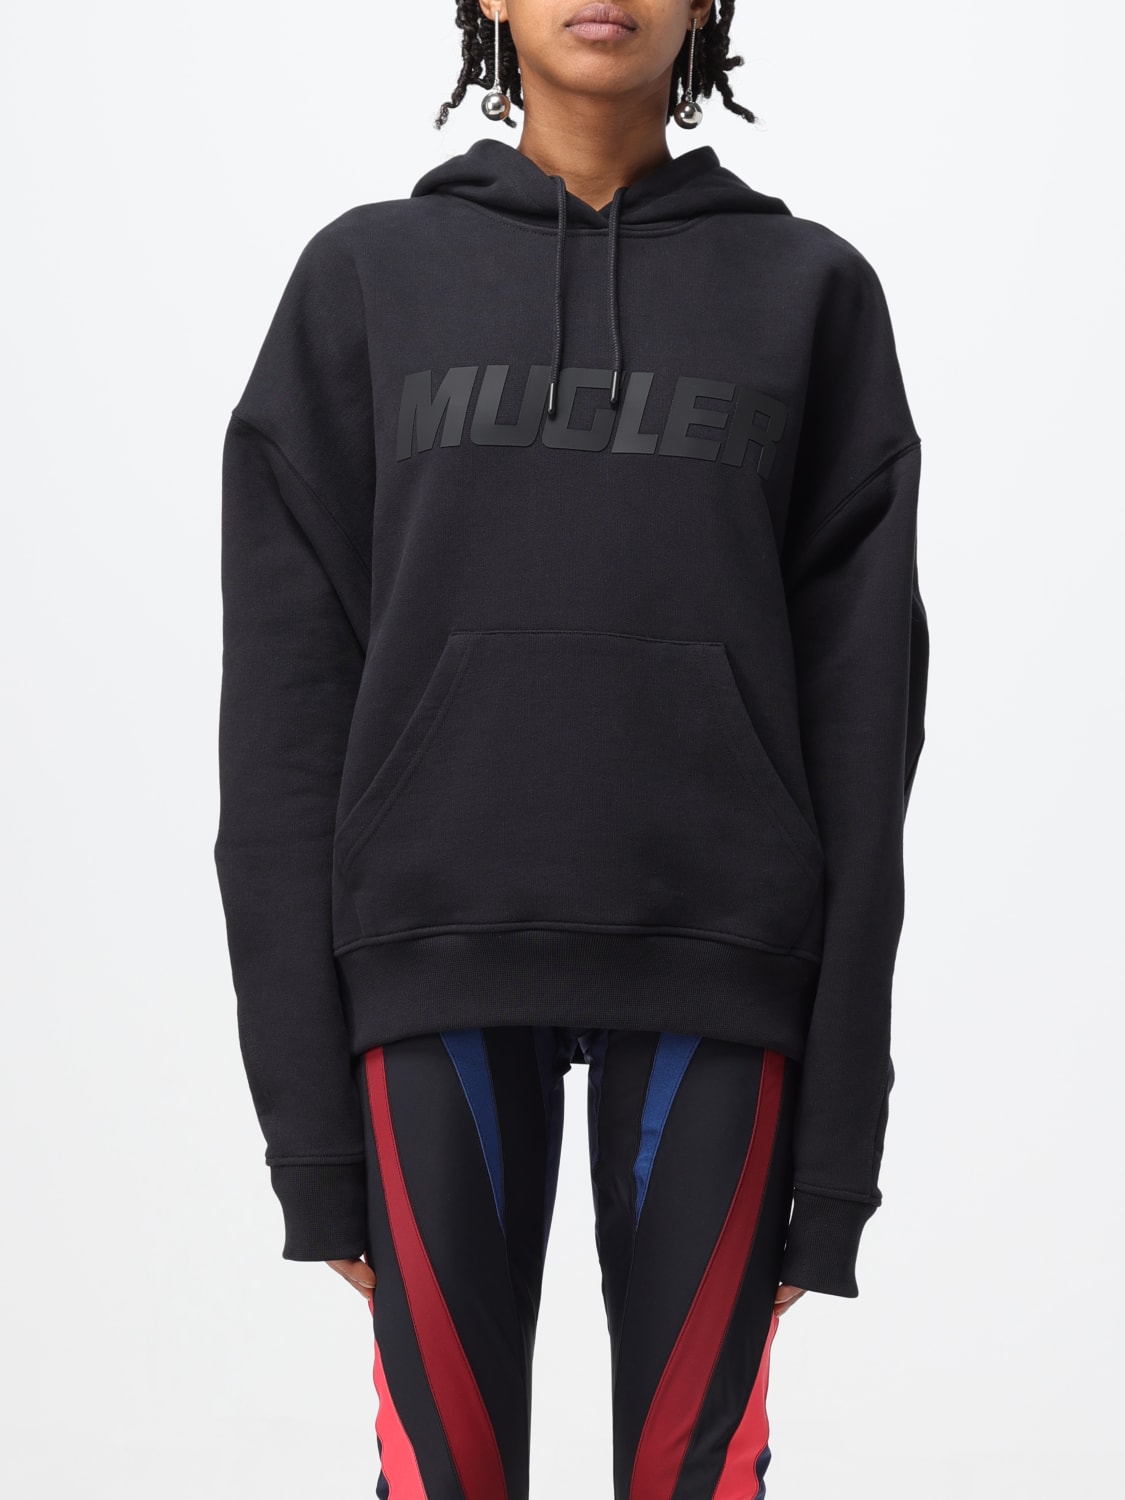 MUGLER: Sweatshirt woman - Black | Mugler sweatshirt 24P3SW0071D604 online  at GIGLIO.COM